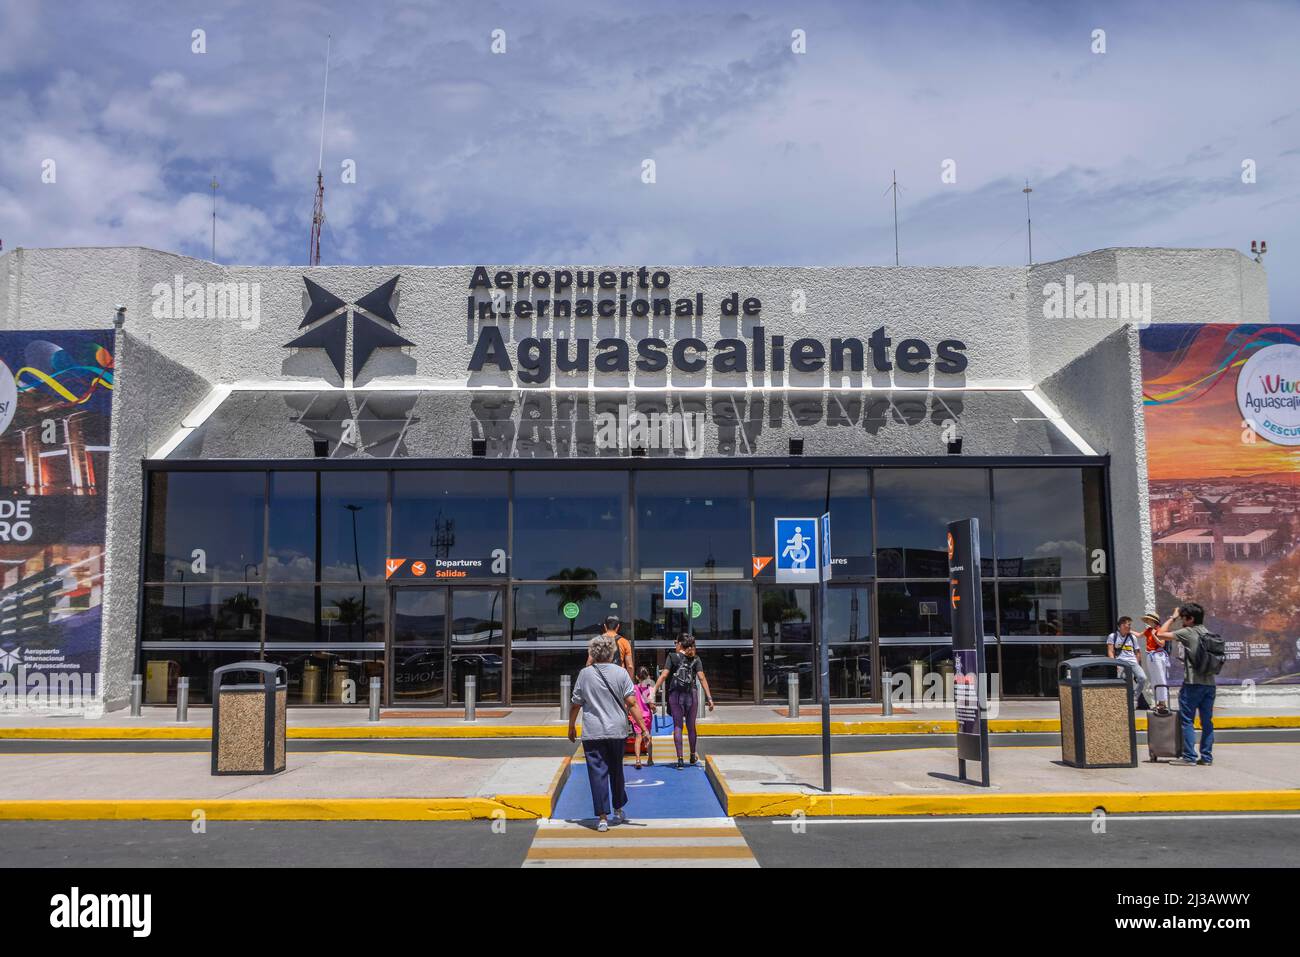 Airport, Aeropuerto Internacional, Aguascalientes, Mexico Stock Photo